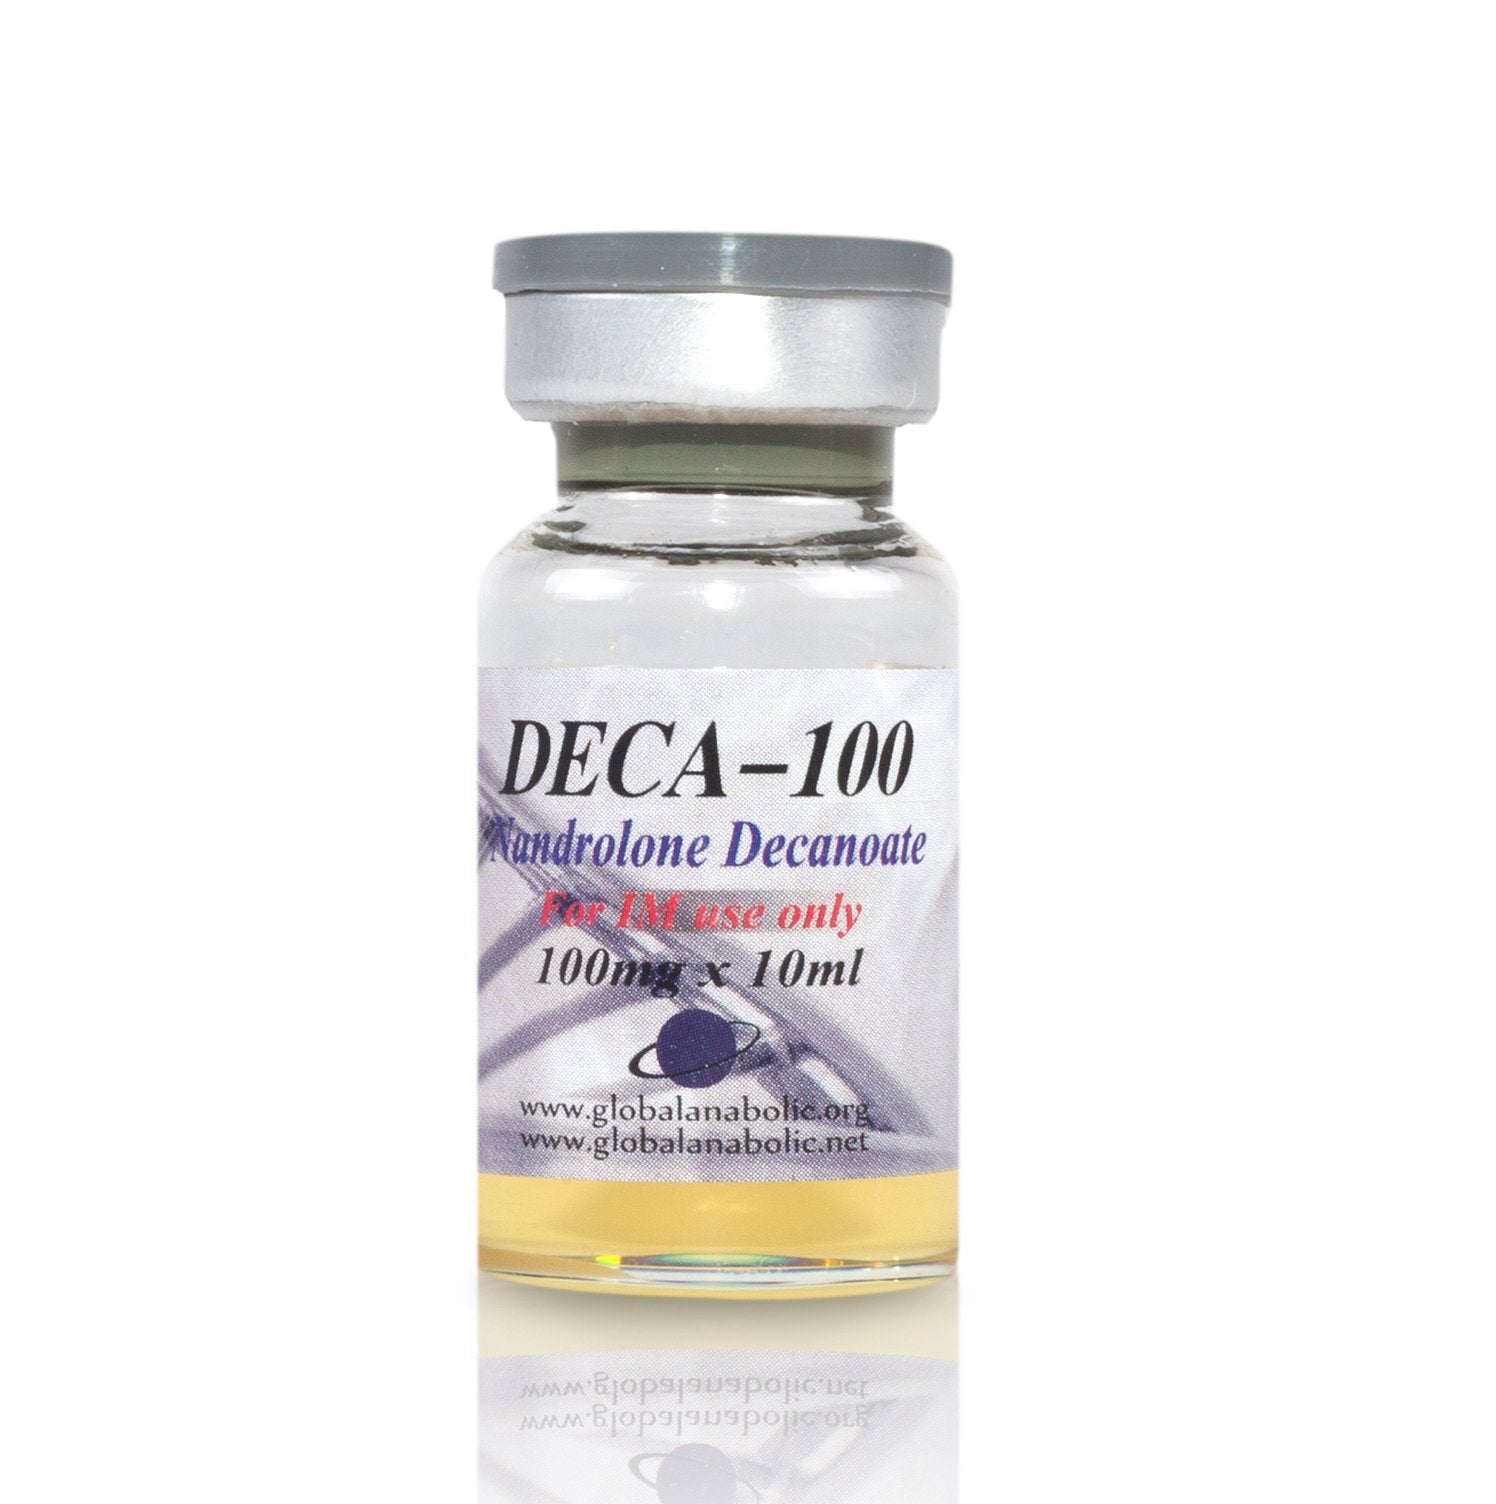 DECA-100